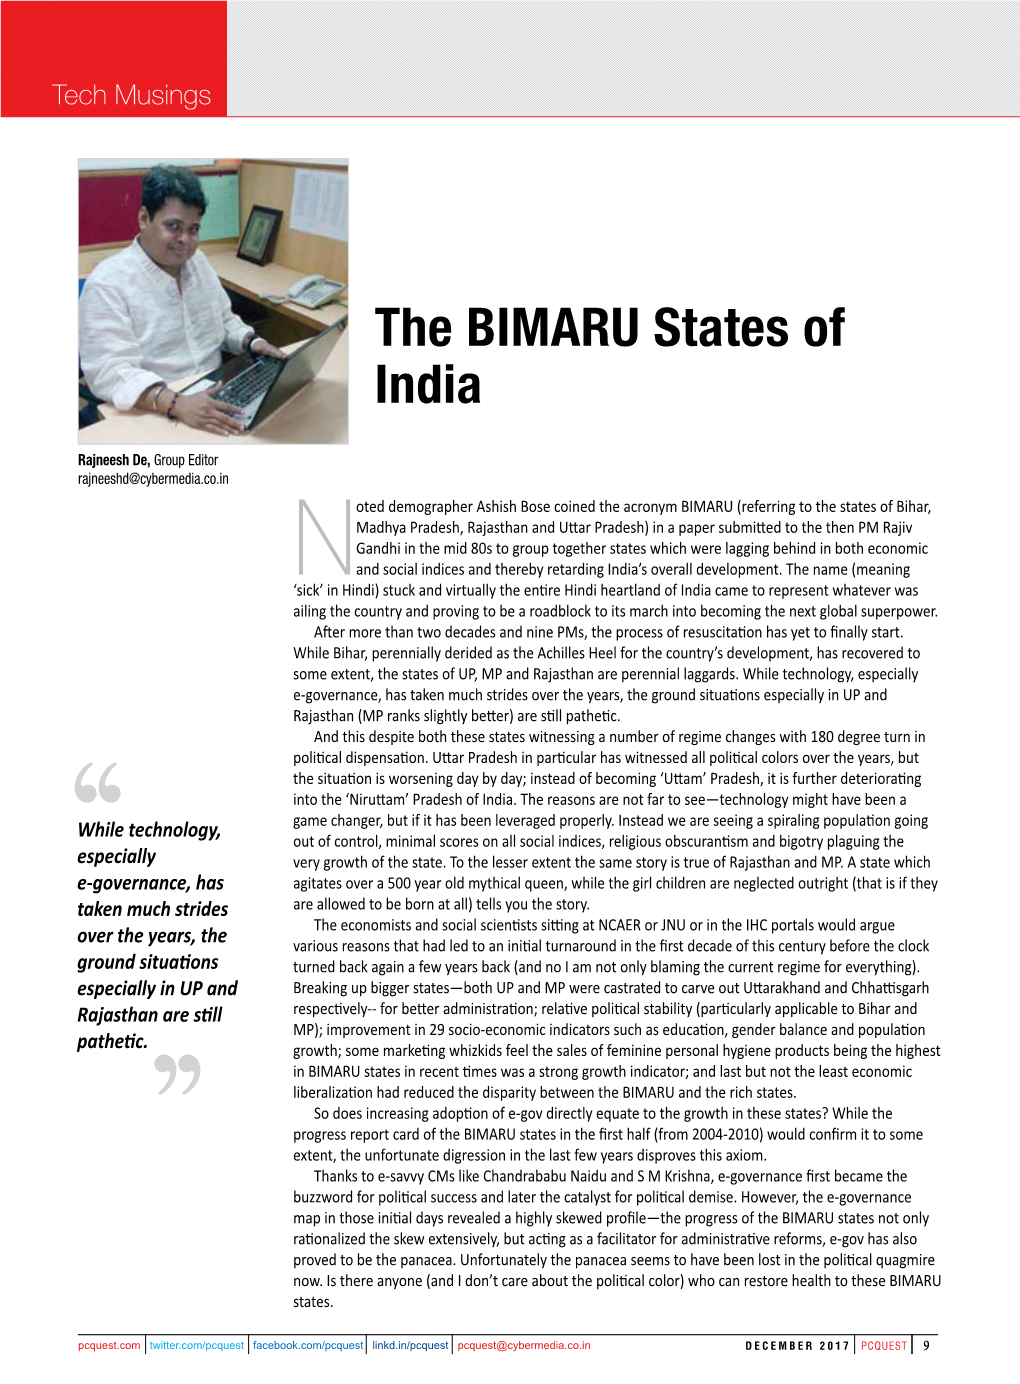 The BIMARU States of India